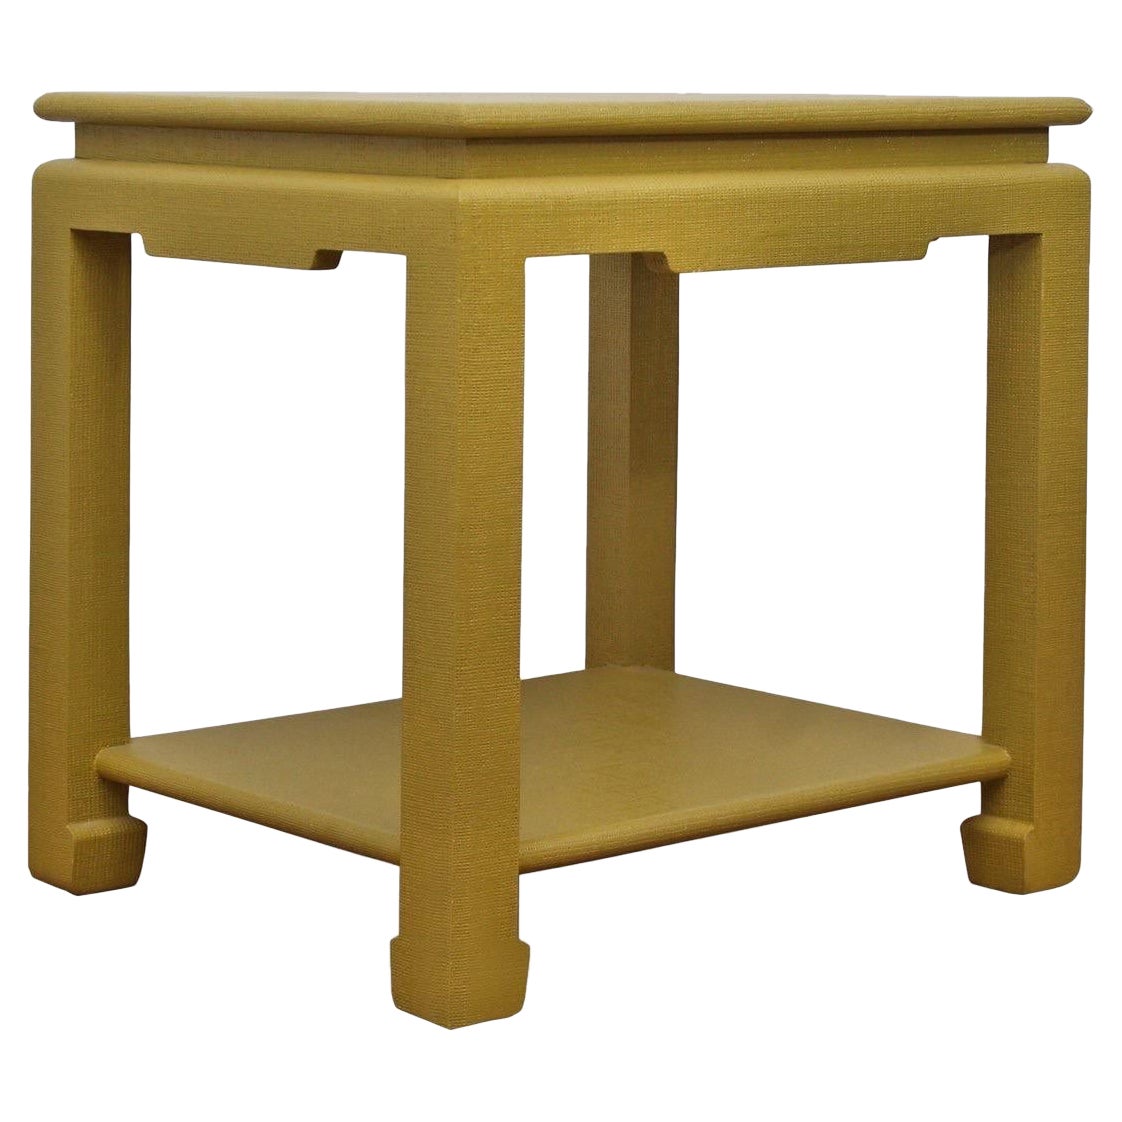 Table d'appoint asiatique enveloppée de lin beige style Karl Springer